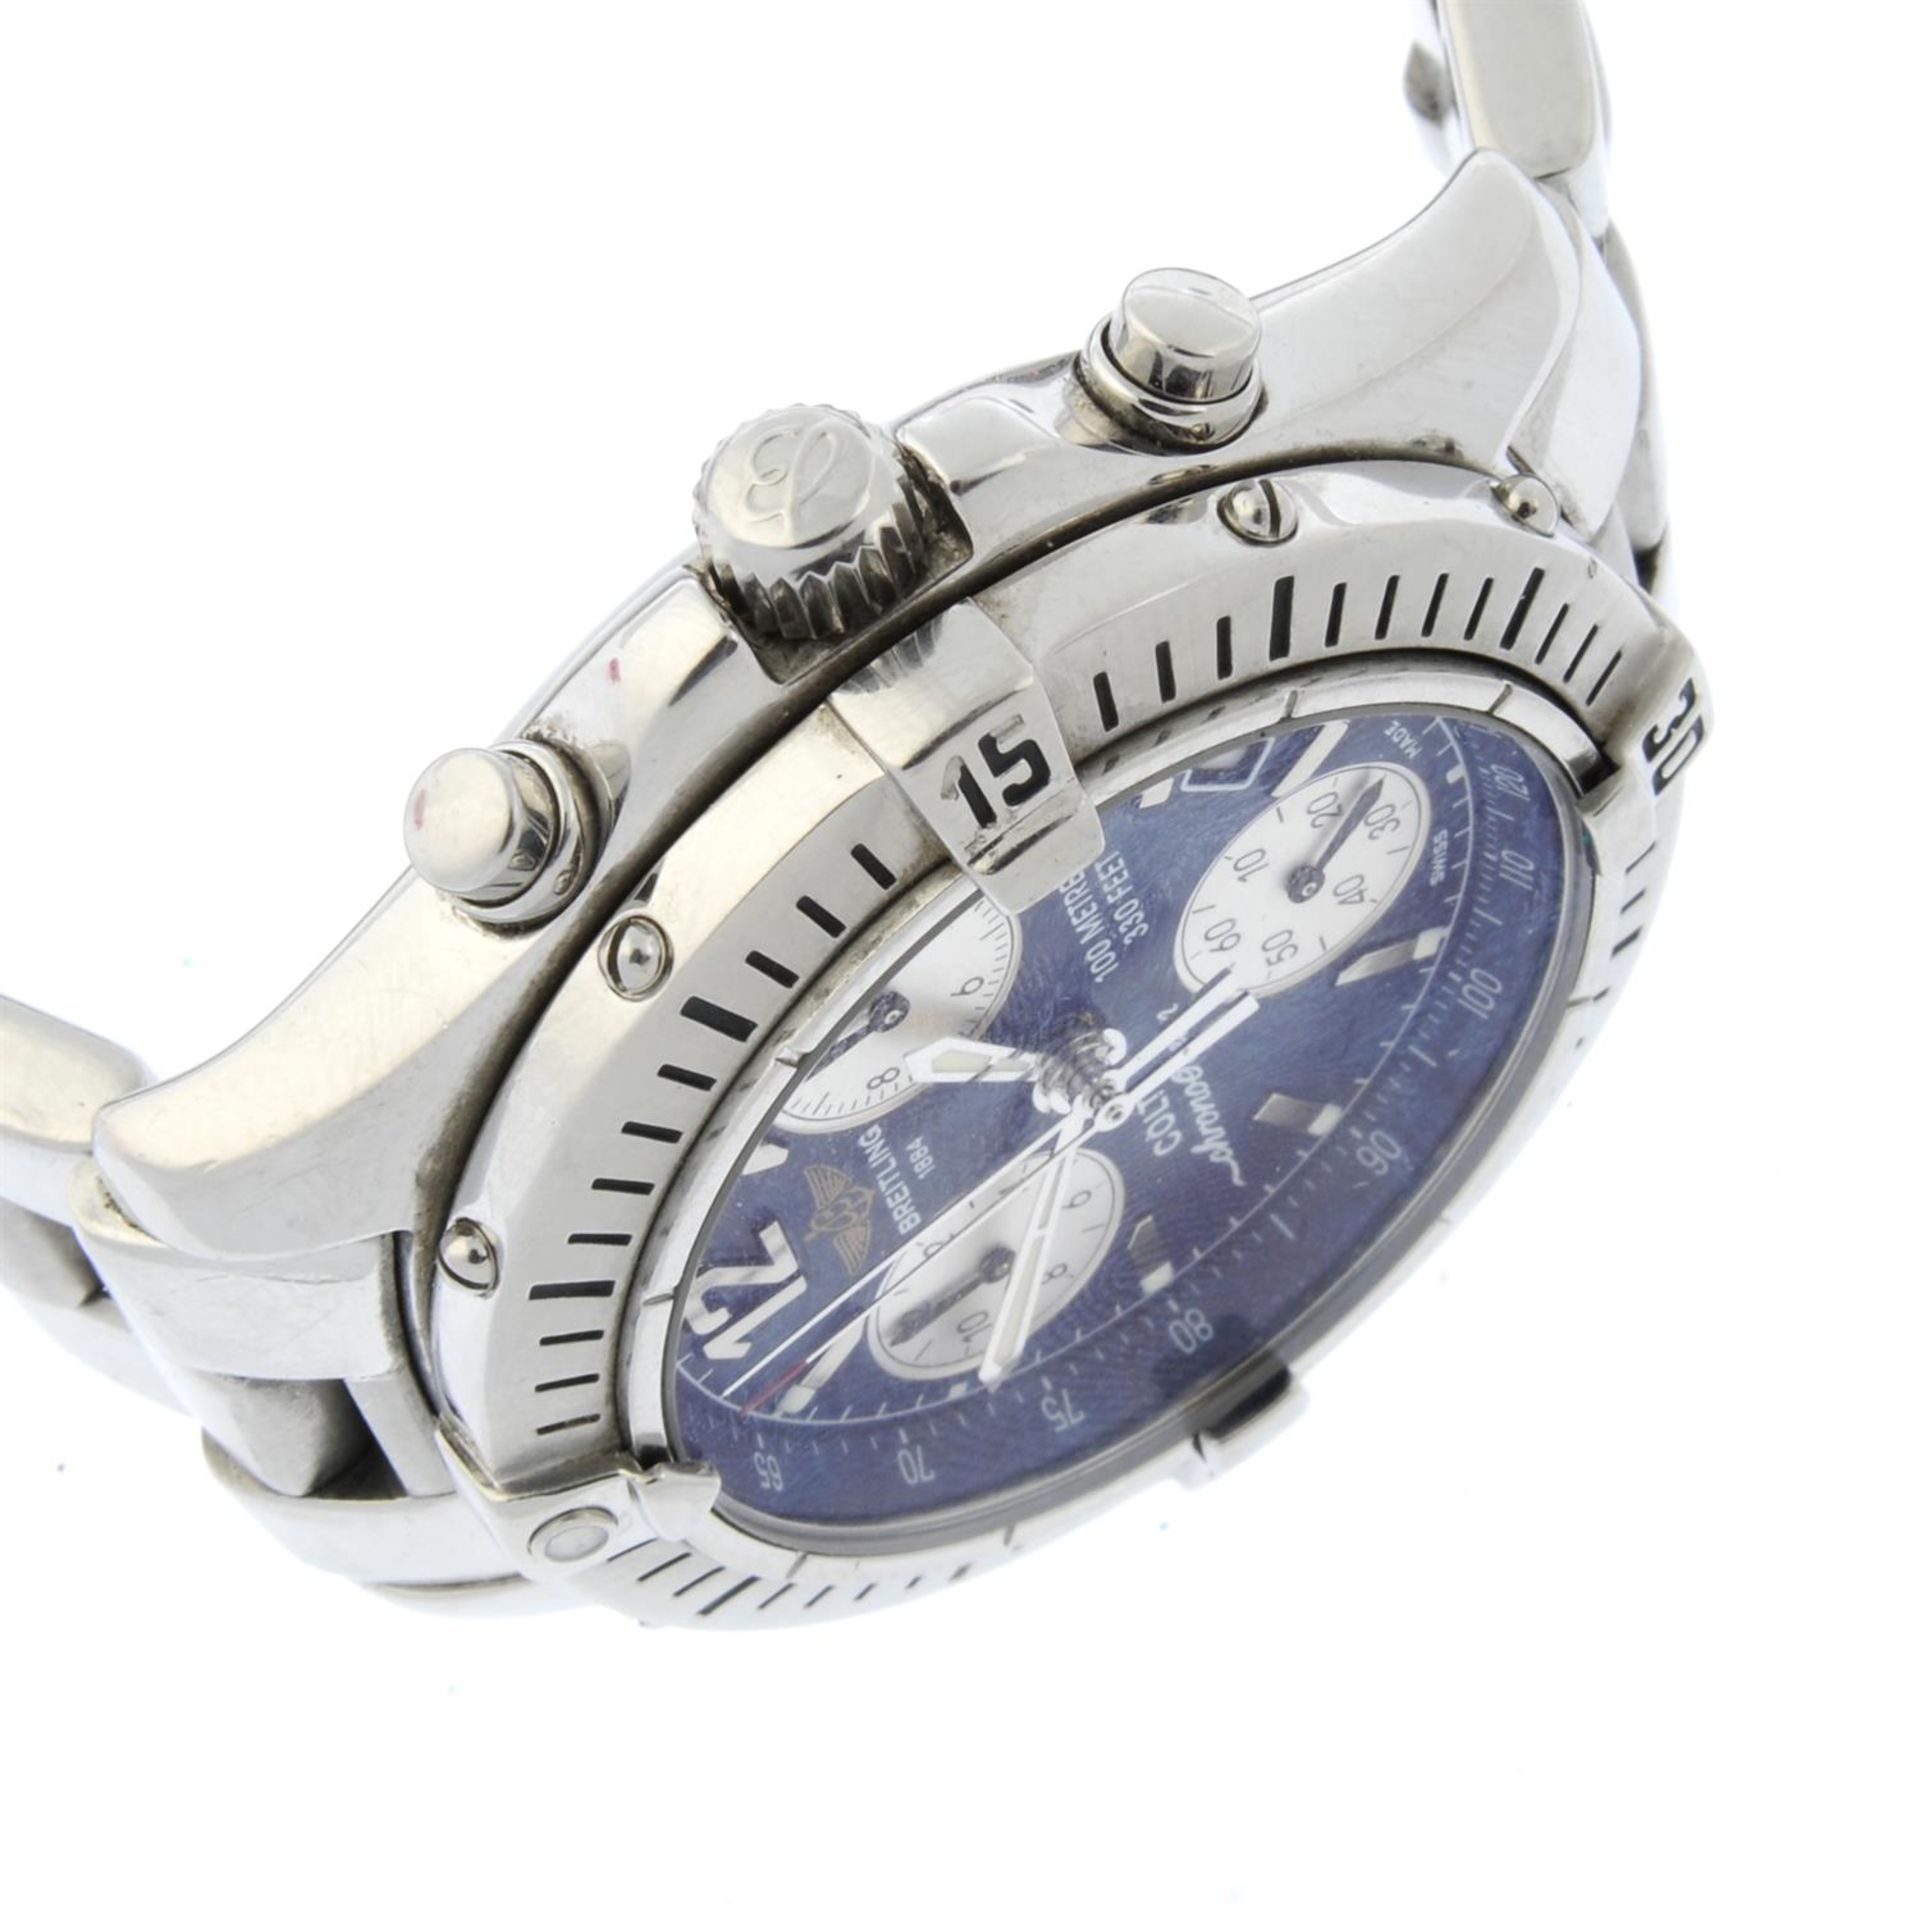 BREITLING - a stainless steel Colt Quartz Ocean chronograph bracelet watch, 38mm. - Image 3 of 5